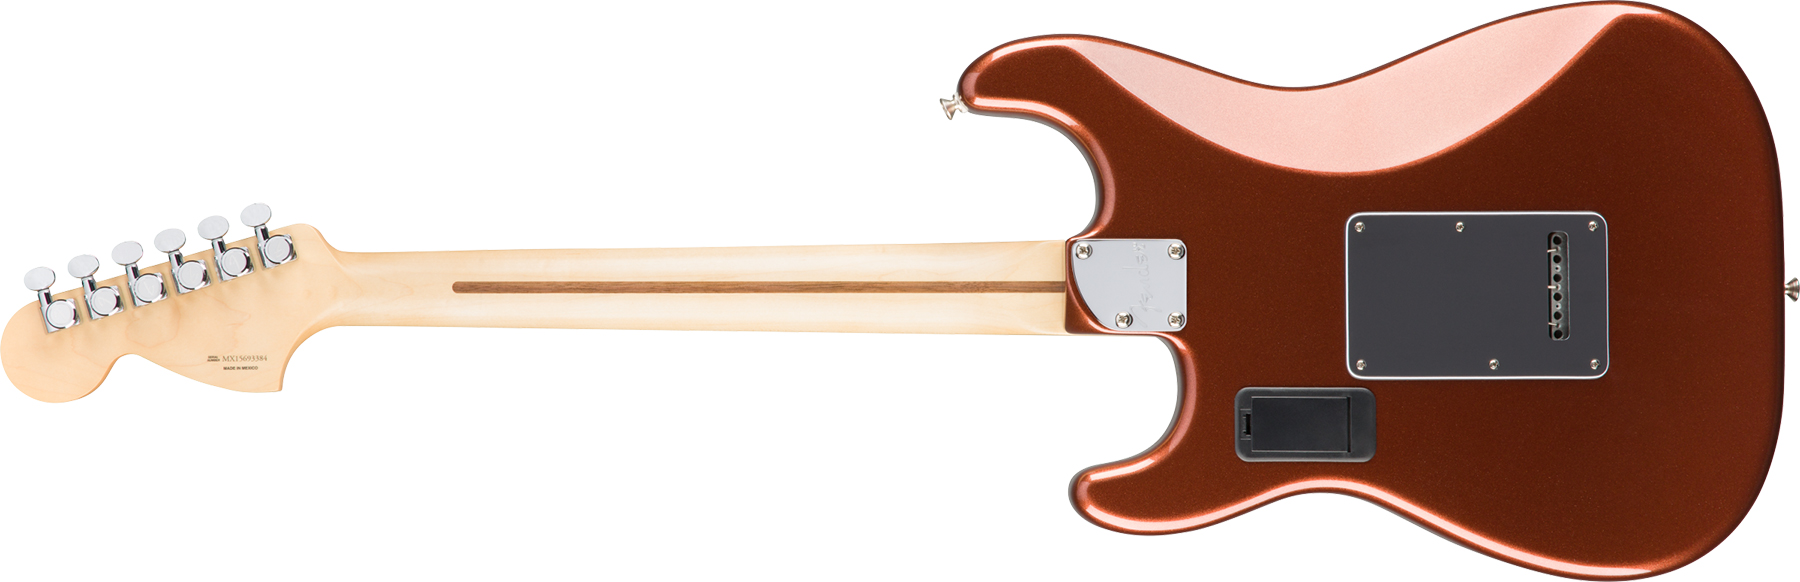 Fender Strat Deluxe Roadhouse Mex Mn - Classic Copper - Elektrische gitaar in Str-vorm - Variation 1